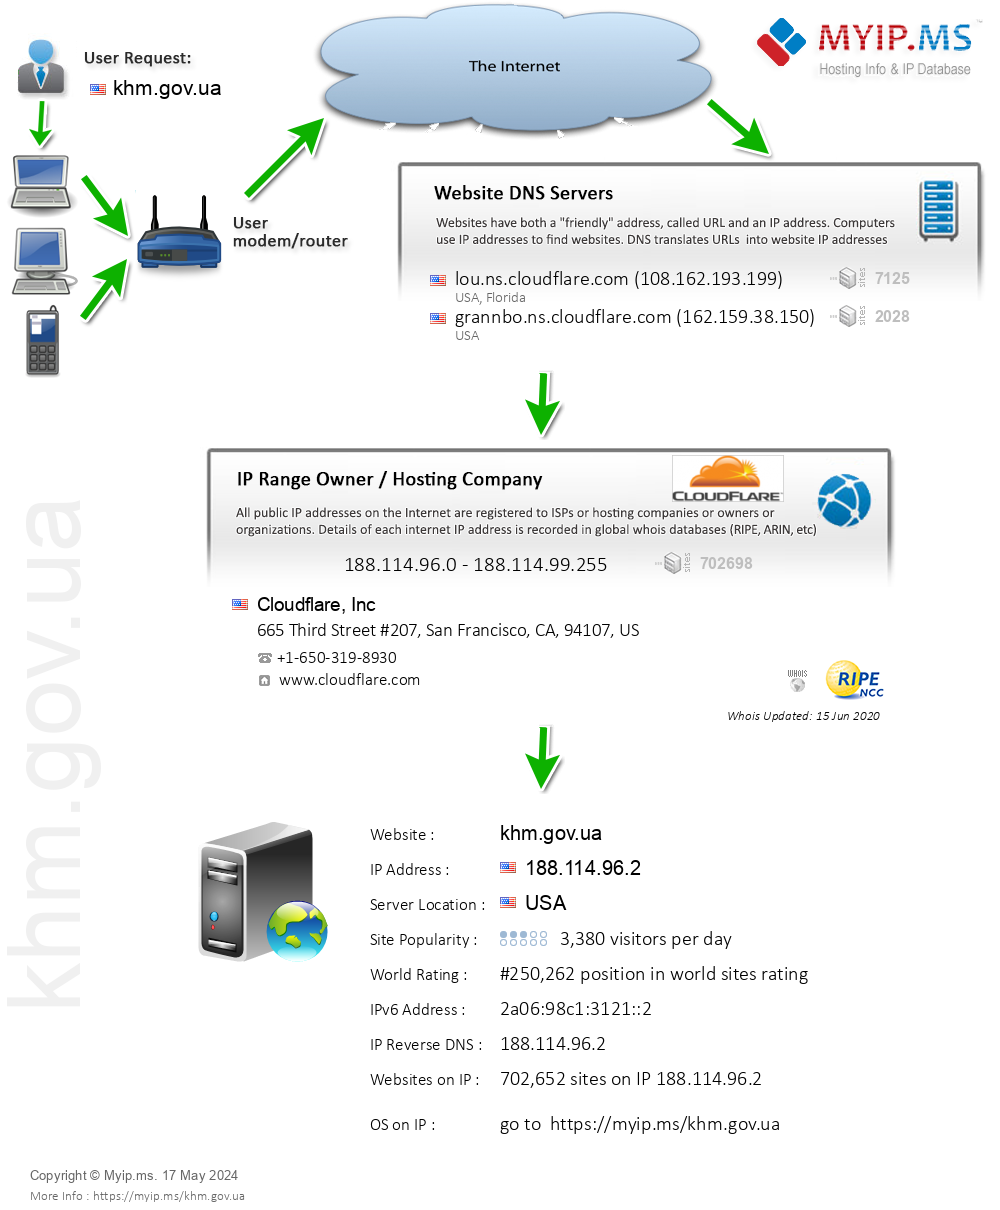 Khm.gov.ua - Website Hosting Visual IP Diagram